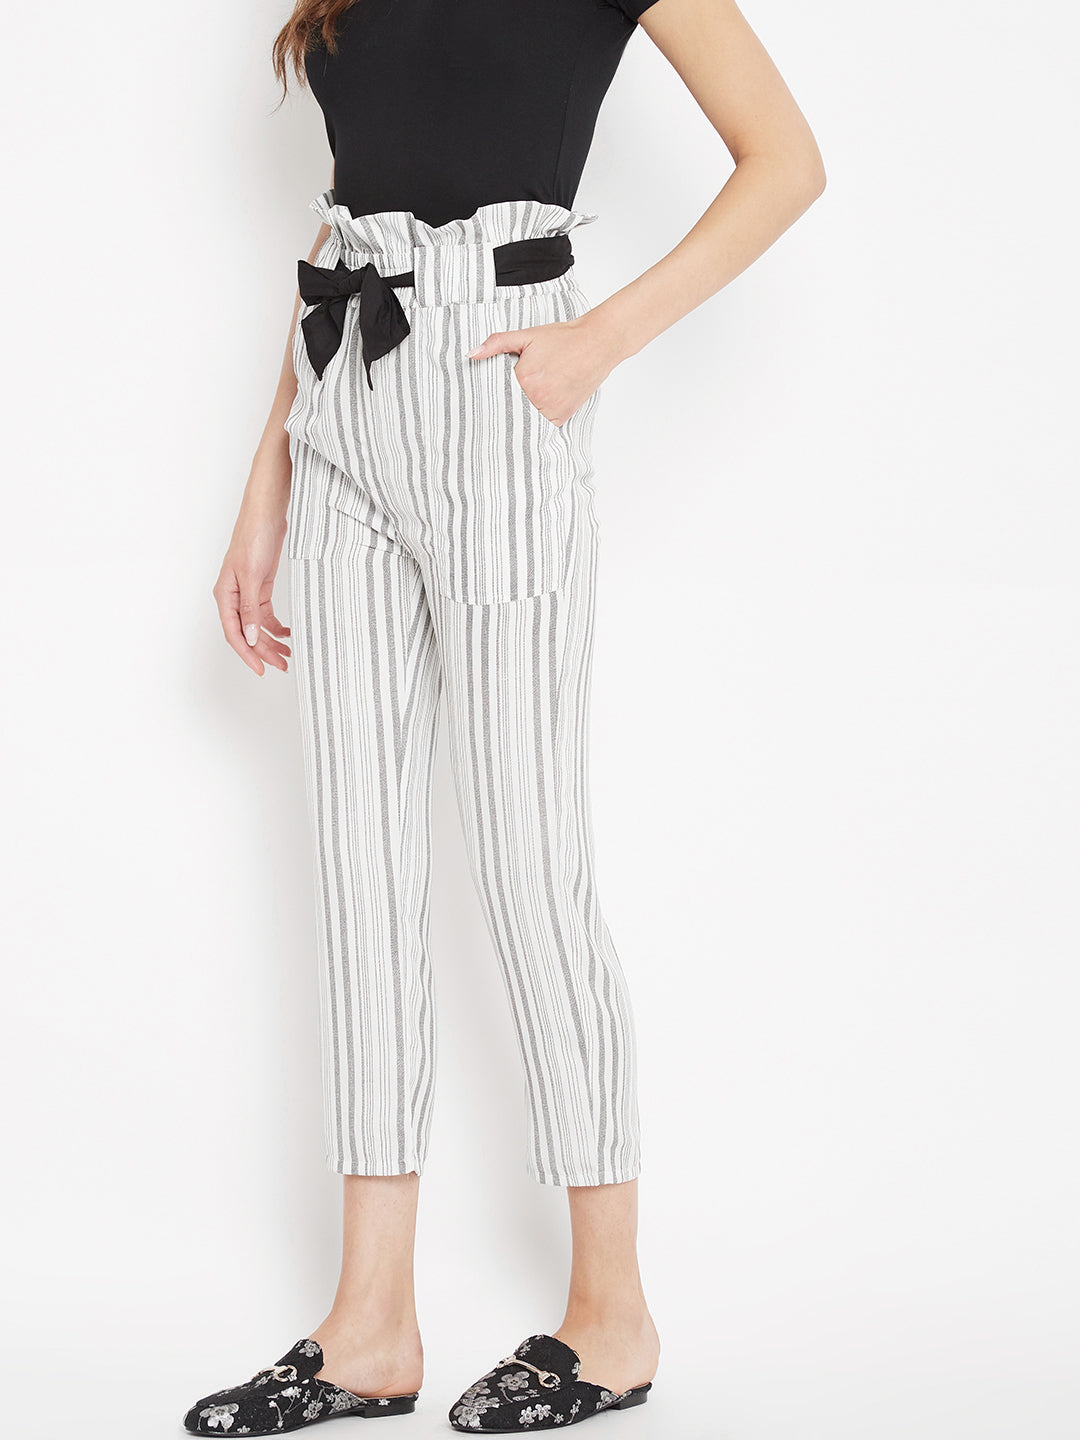 Women's ivory grey stripes high waist trouser